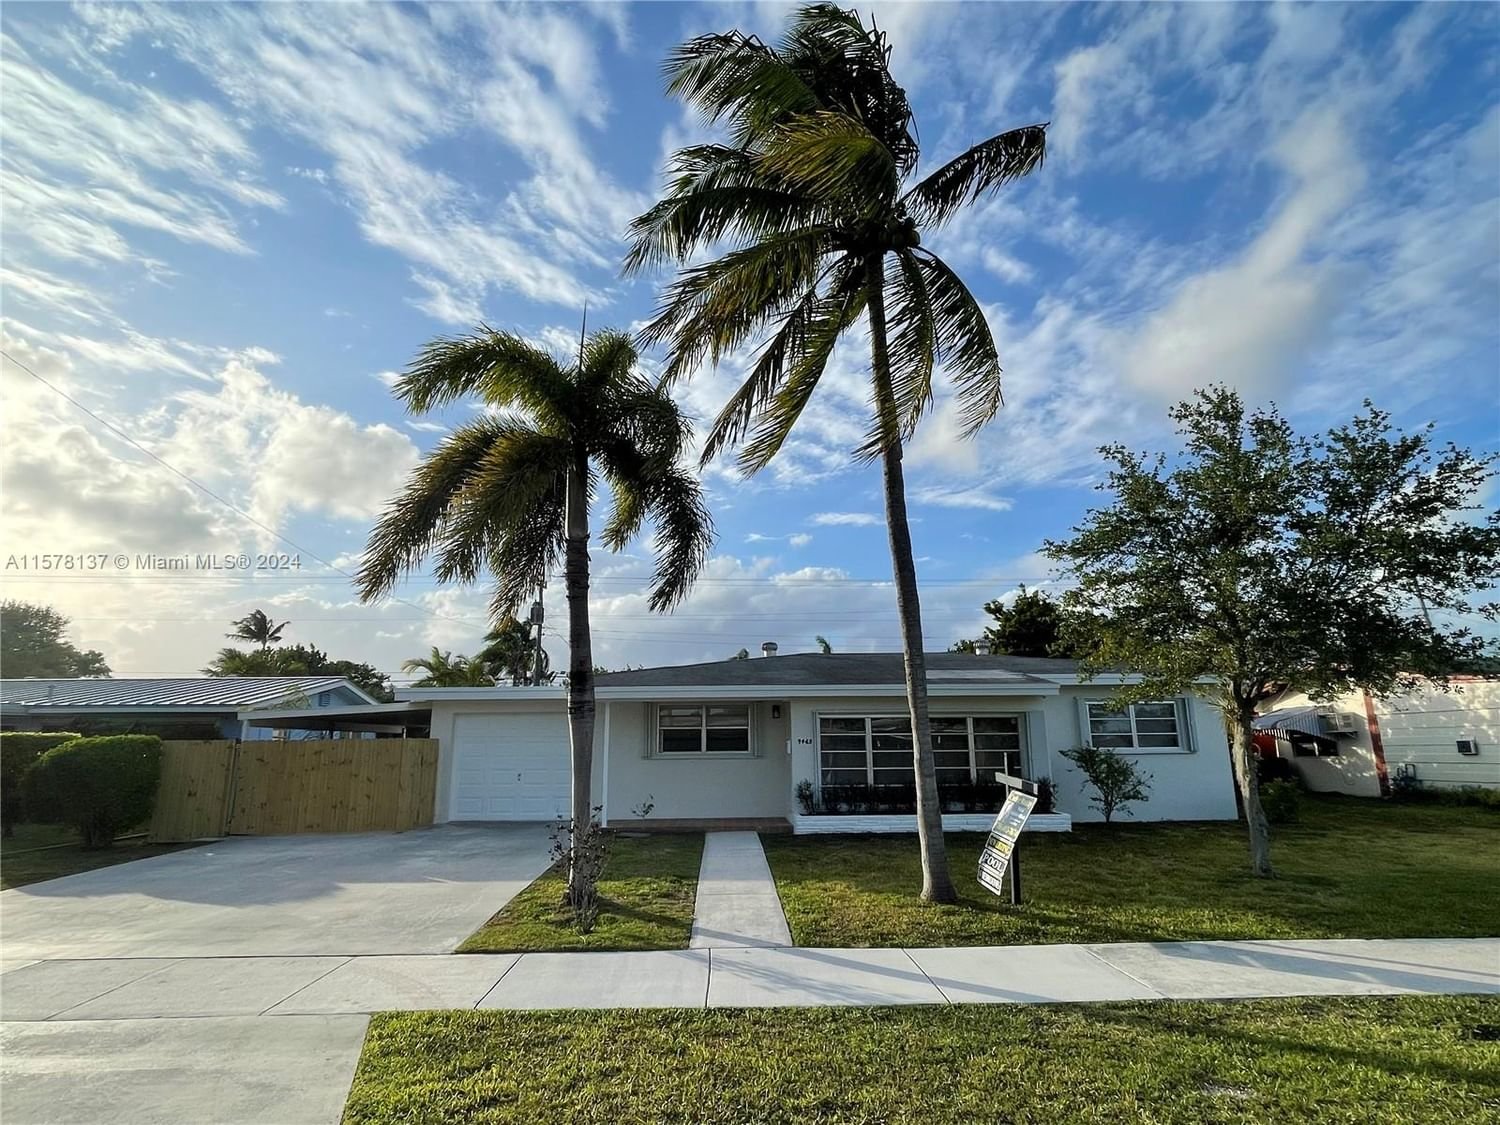 Real estate property located at 9465 Nassau Dr, Miami-Dade County, CUTLER RIDGE SEC 3, Cutler Bay, FL